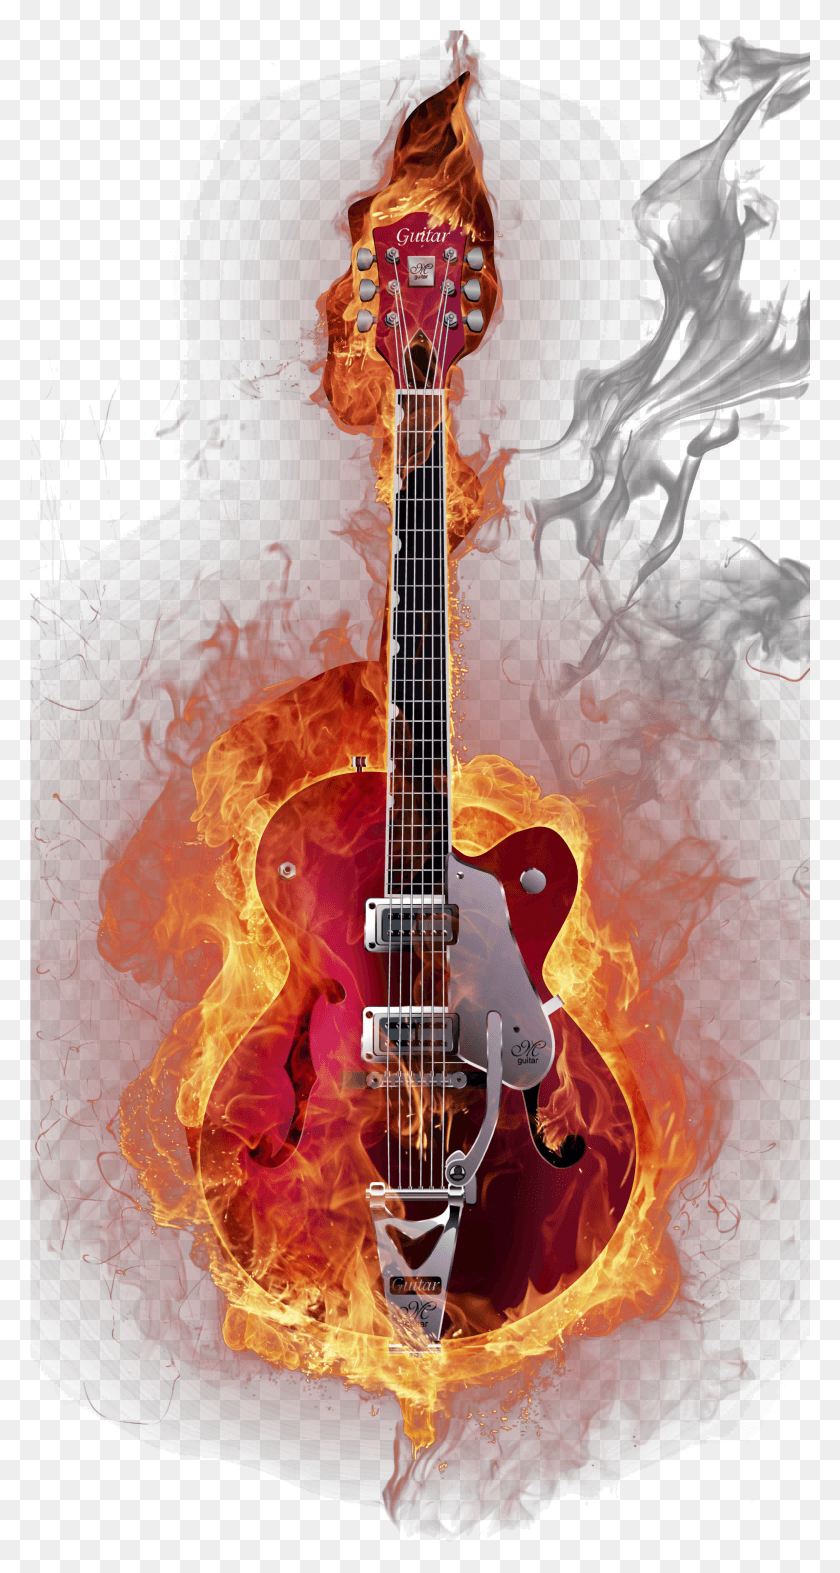 1884x3656 Гитара Feux Музыкальные Инструменты Visual Flame Free Flaming Guitar Hd Png Скачать